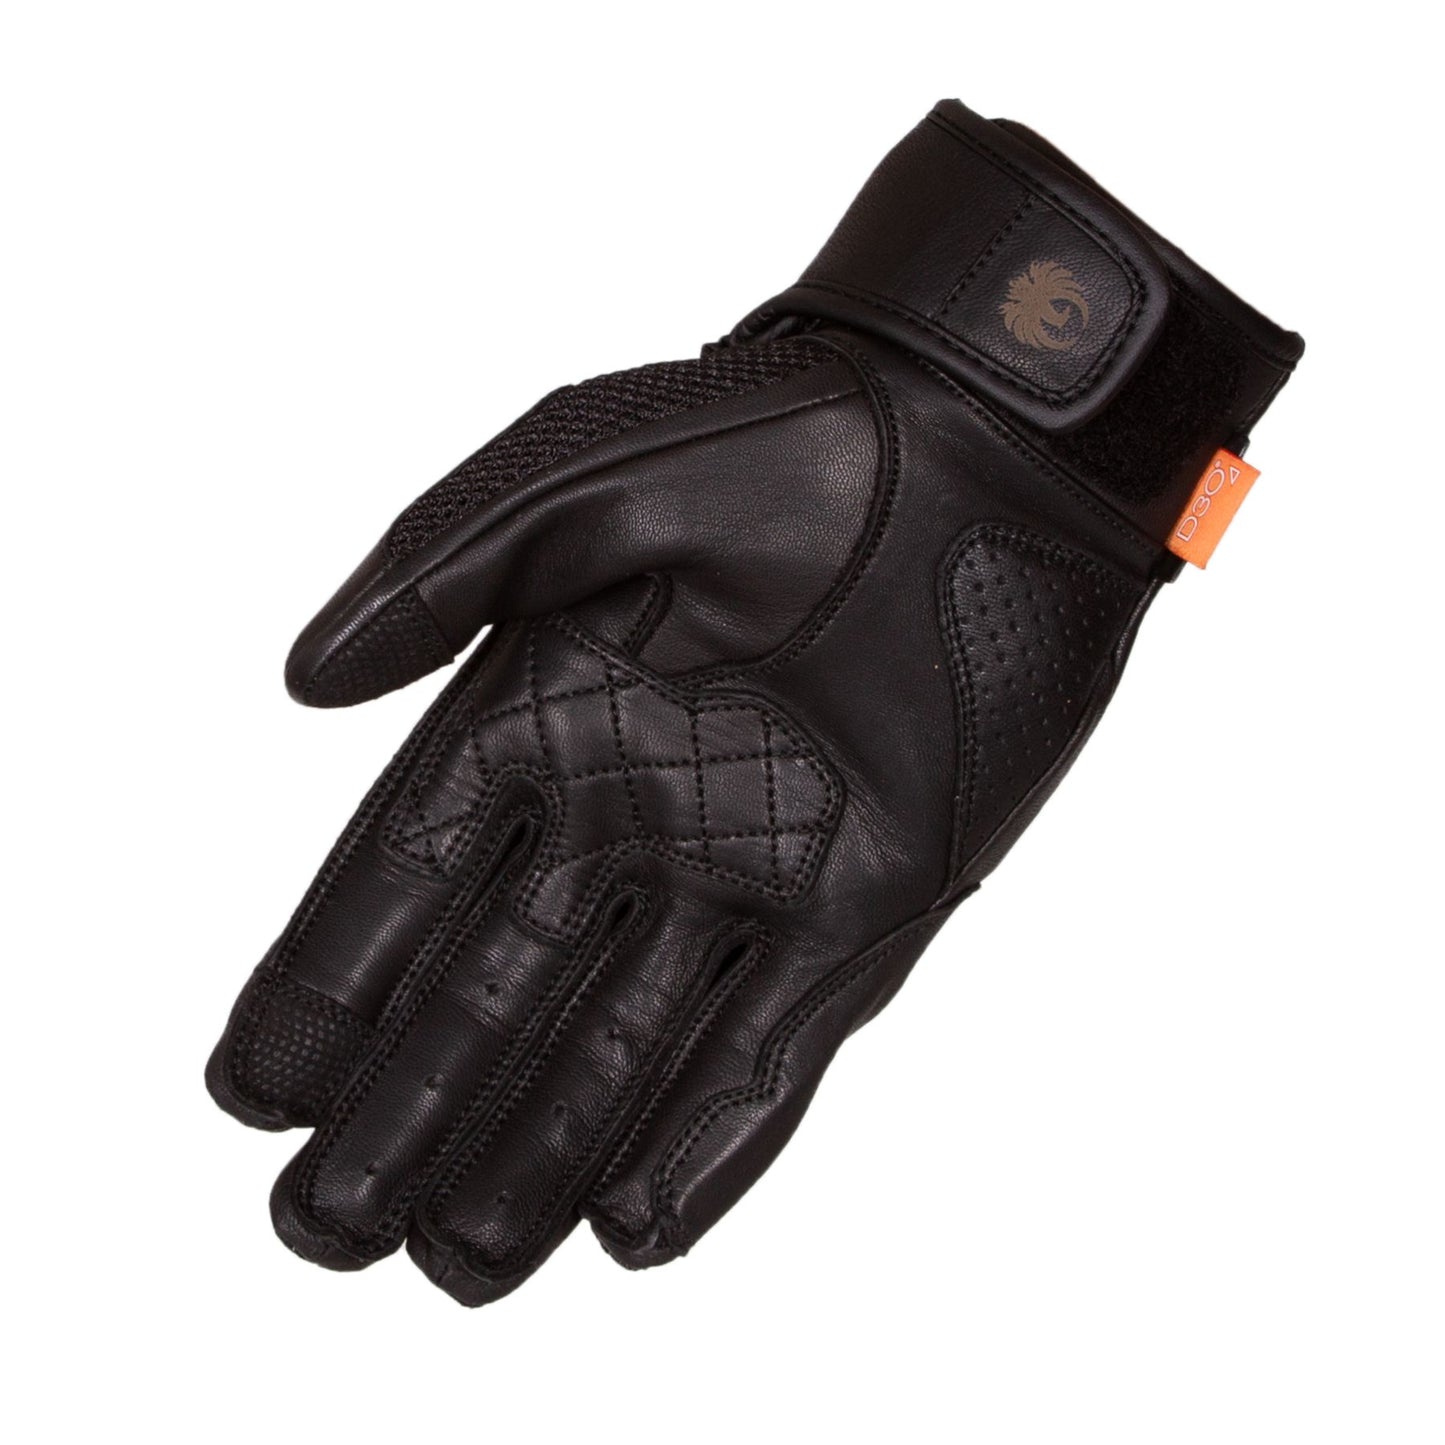 MERLIN Shenstone D30 Leather Mesh Glove